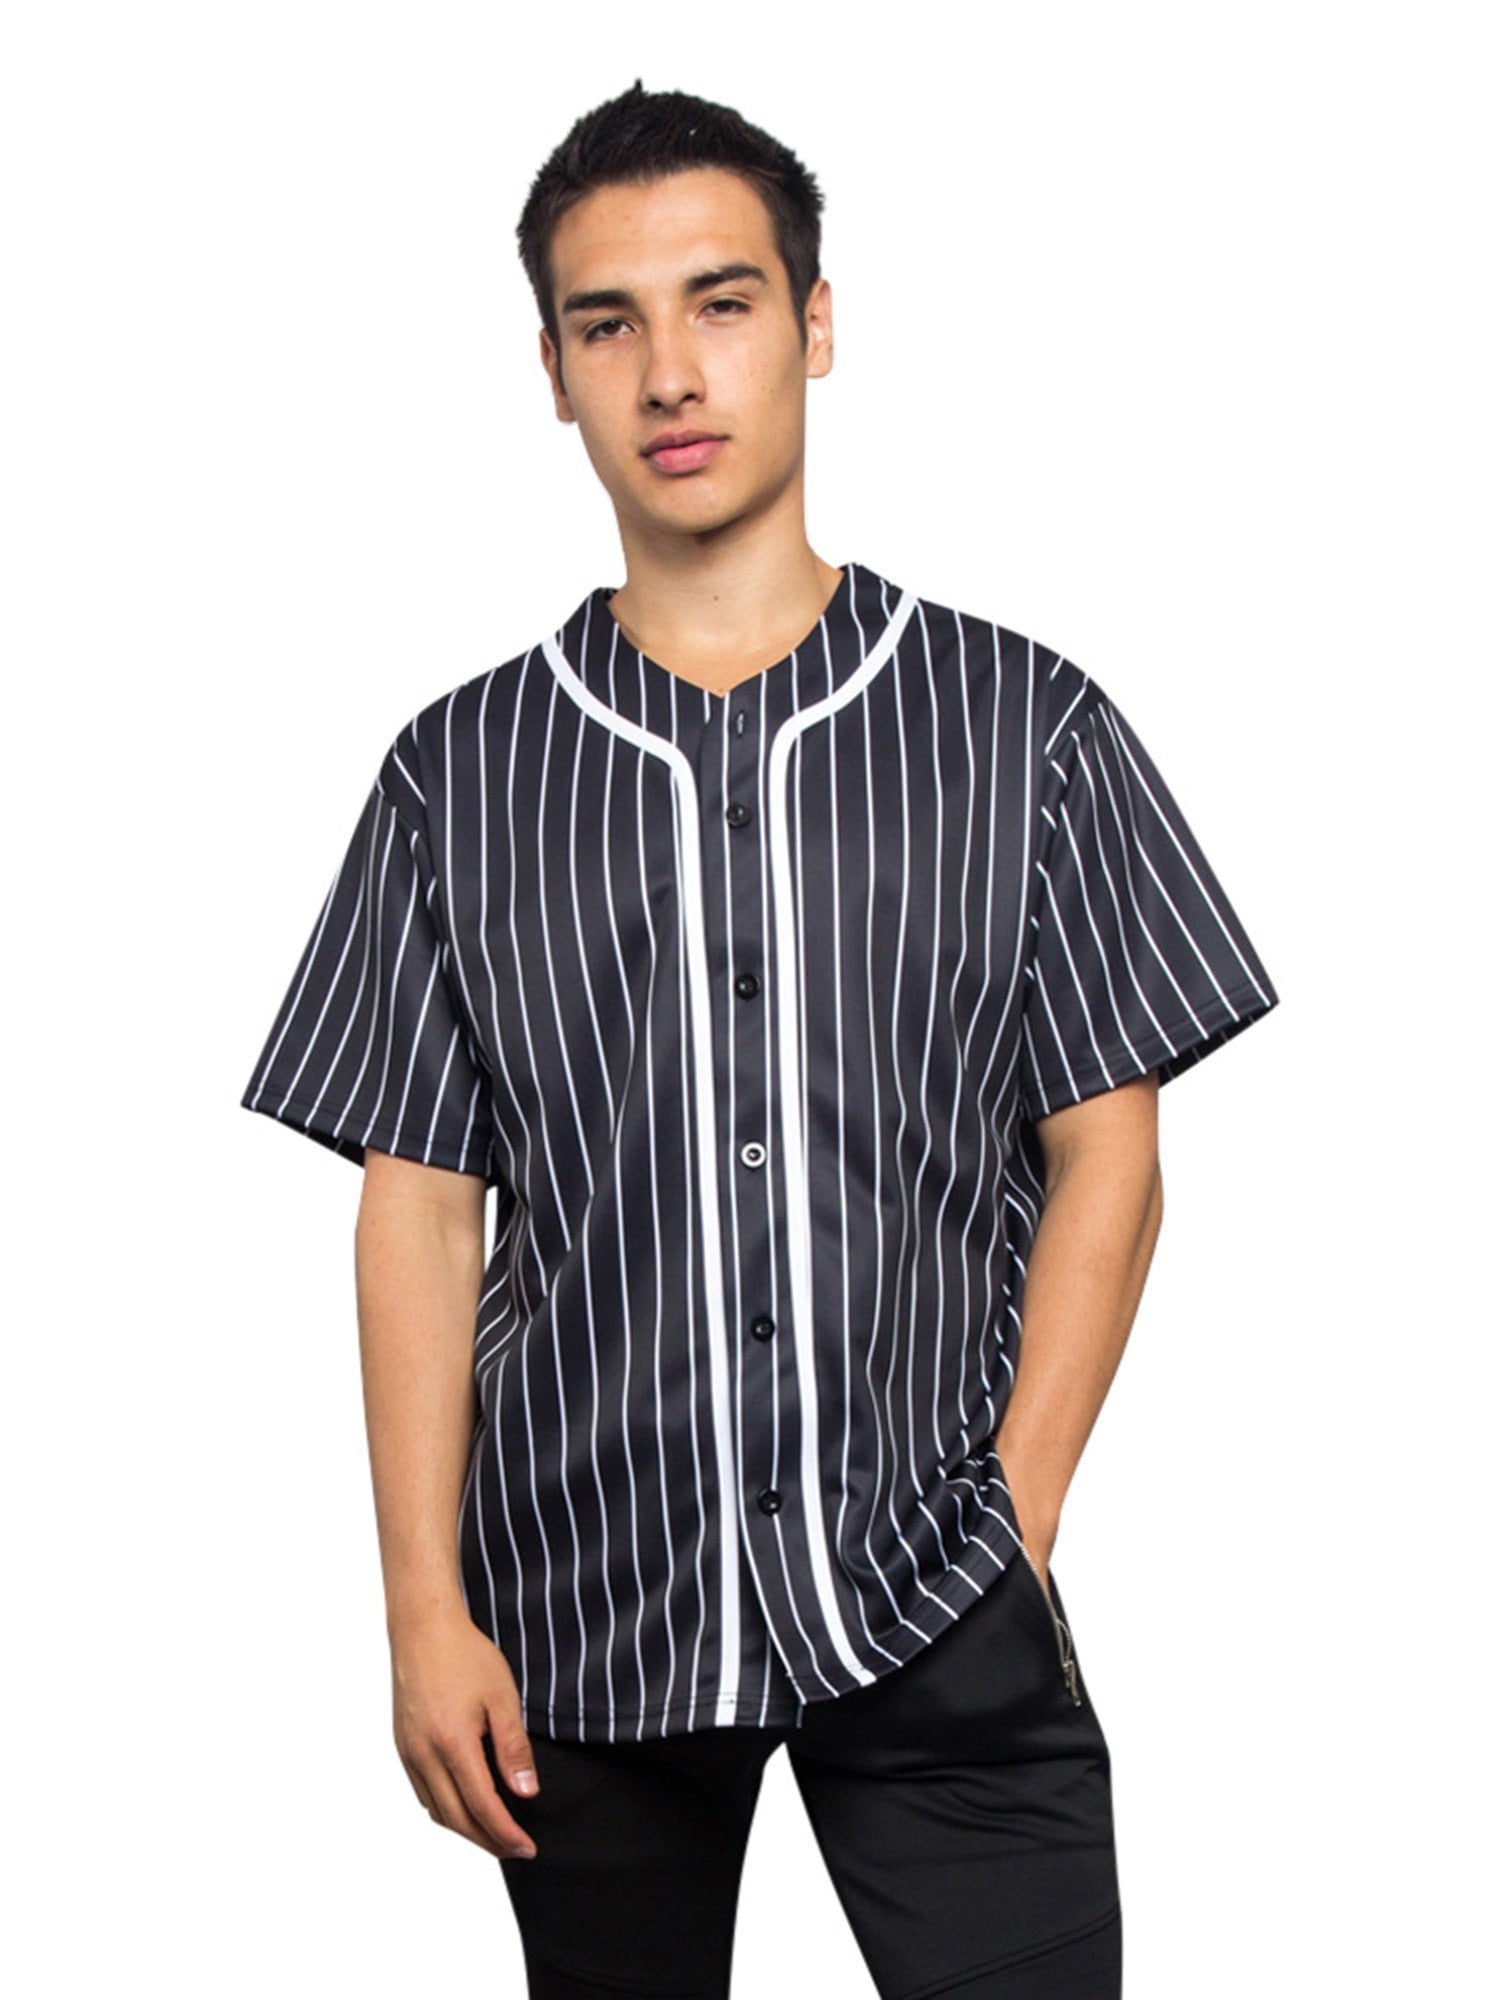 Men's Hipster Hip Hop Button Down Pin Striped Baseball Jersey Short Sleeve  Shirt BJ44 - Black - 5X-Large 